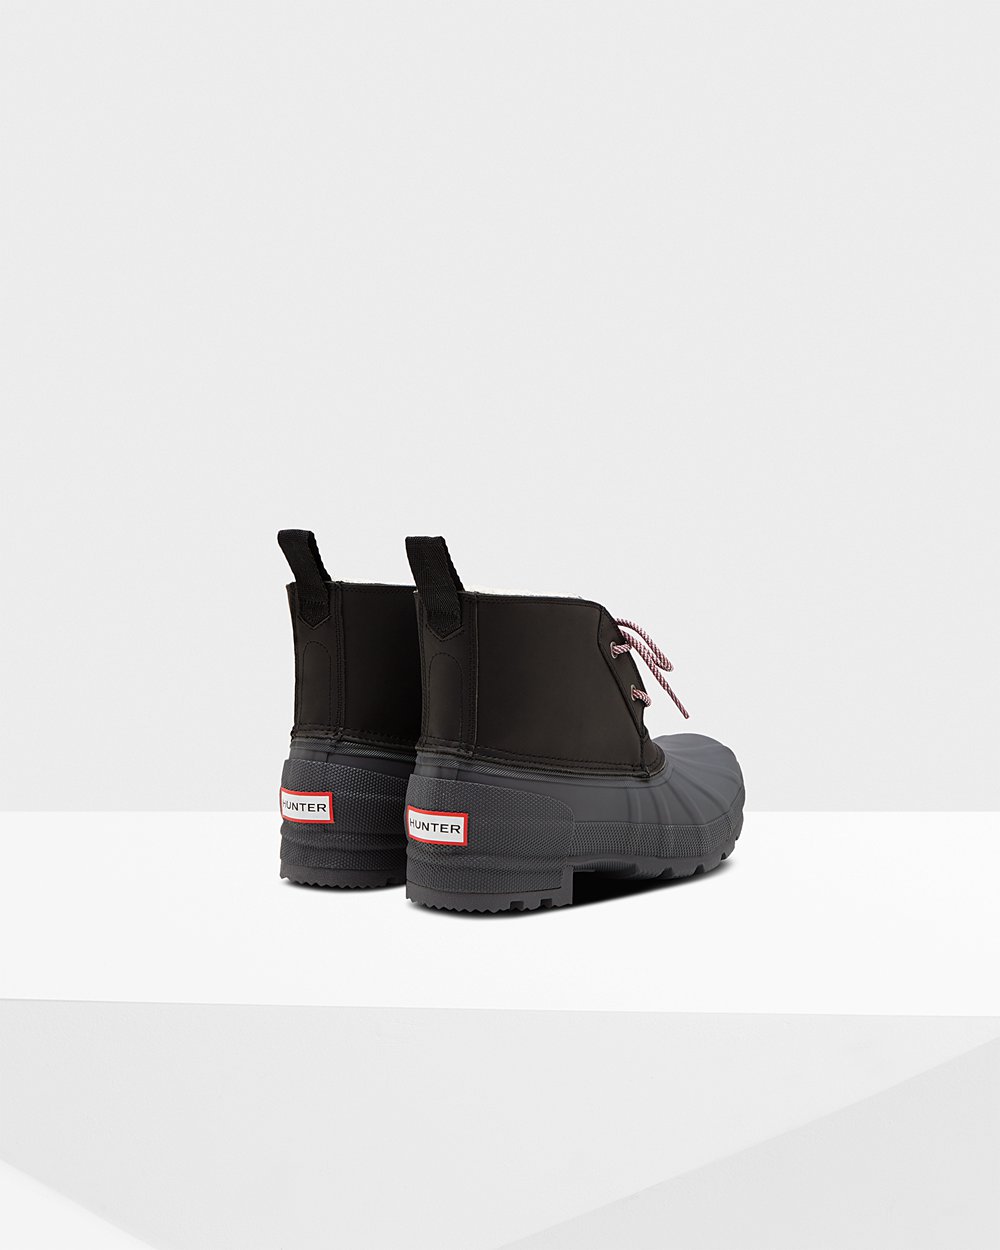 Mens Ankle Boots - Hunter Original Short Insulated (93UYIRGQN) - Black/Grey